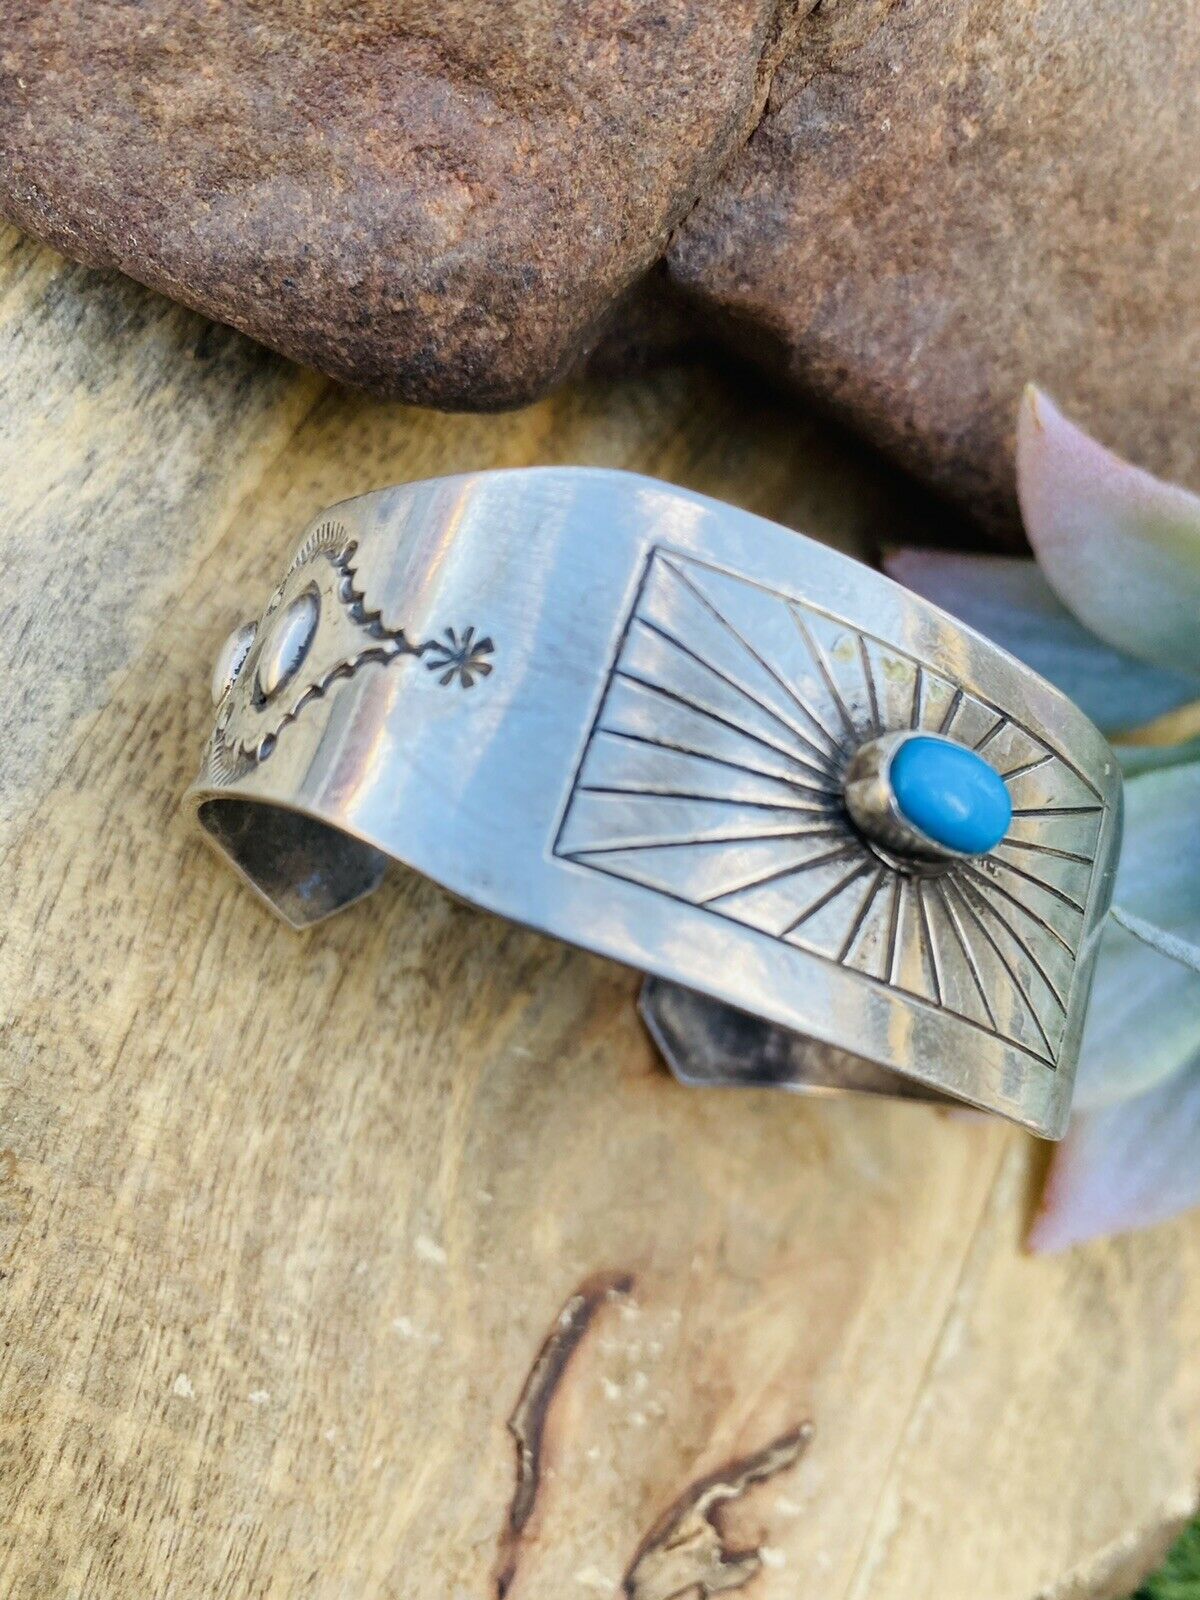 Vintage Navajo Turquoise Sterling Silver Cuff Bracelet